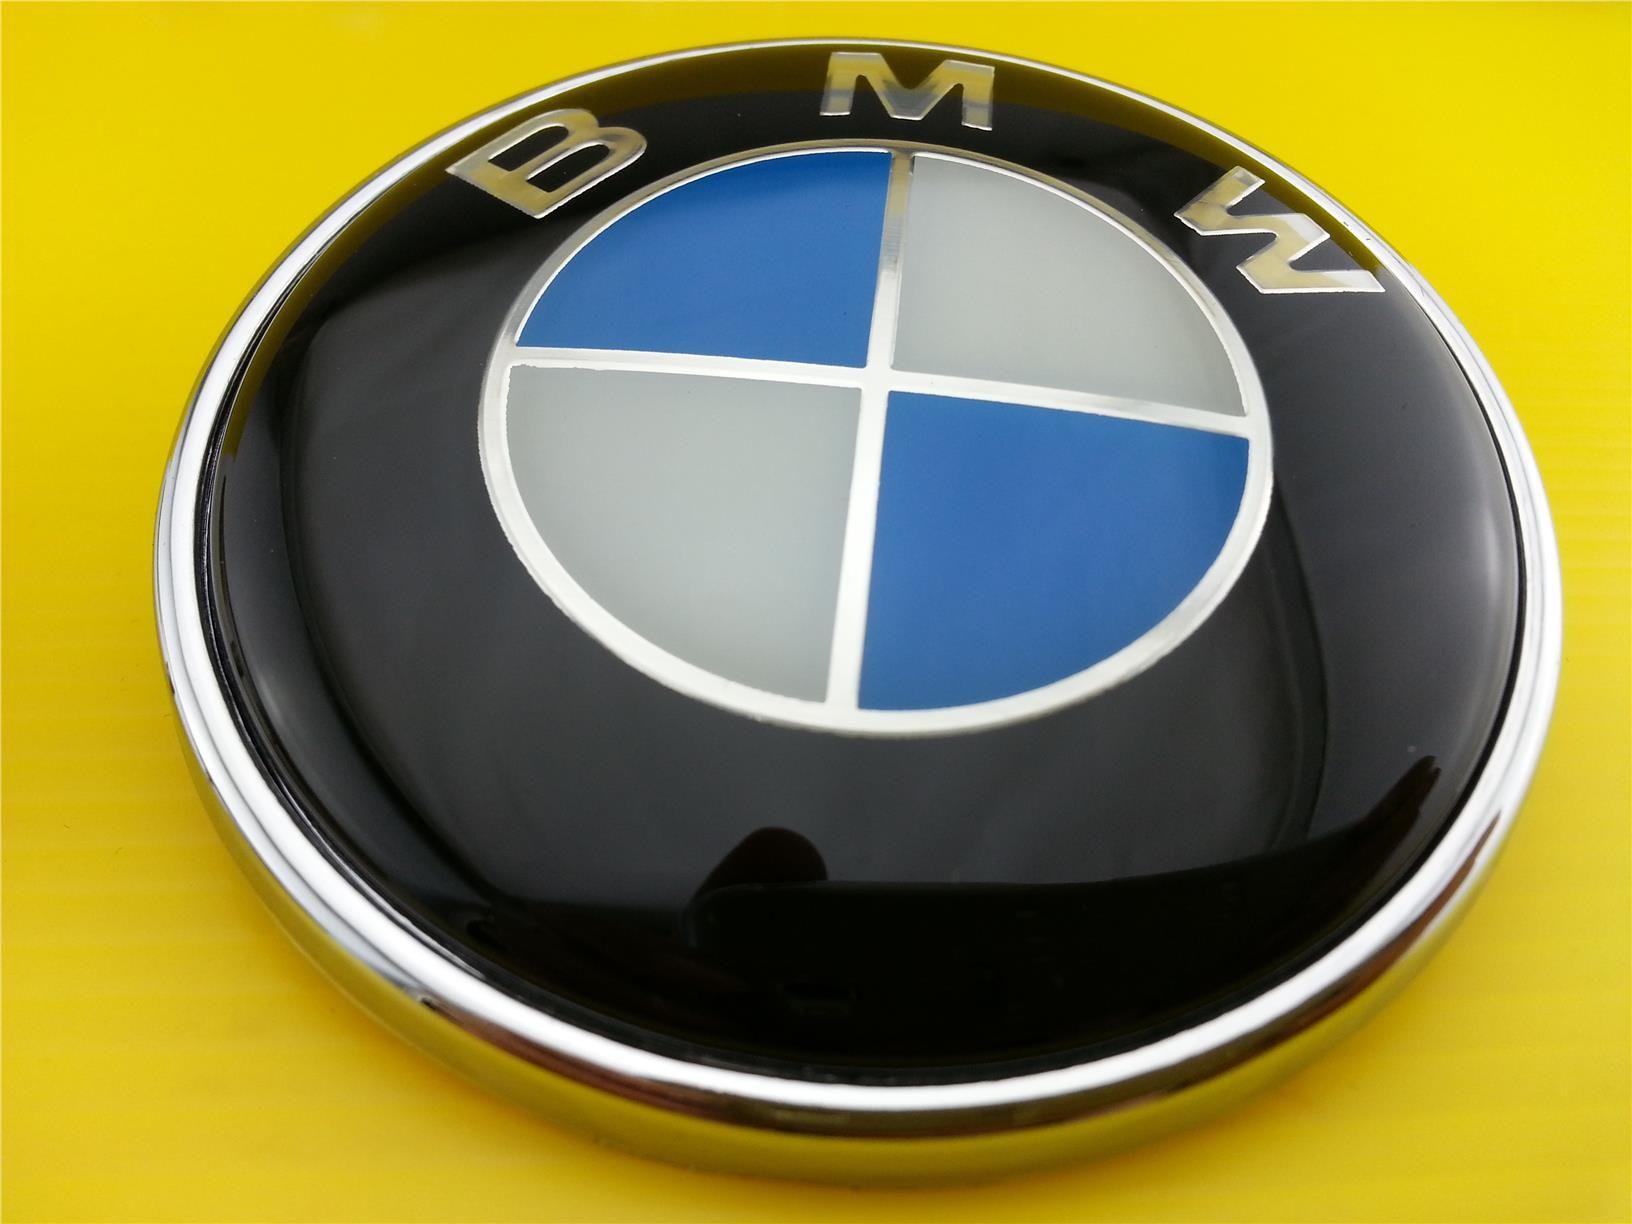 New BMW Logo - New BMW EMBLEM LOGO FRONT OR REAR S (end 10 24 2019 8:38 AM)